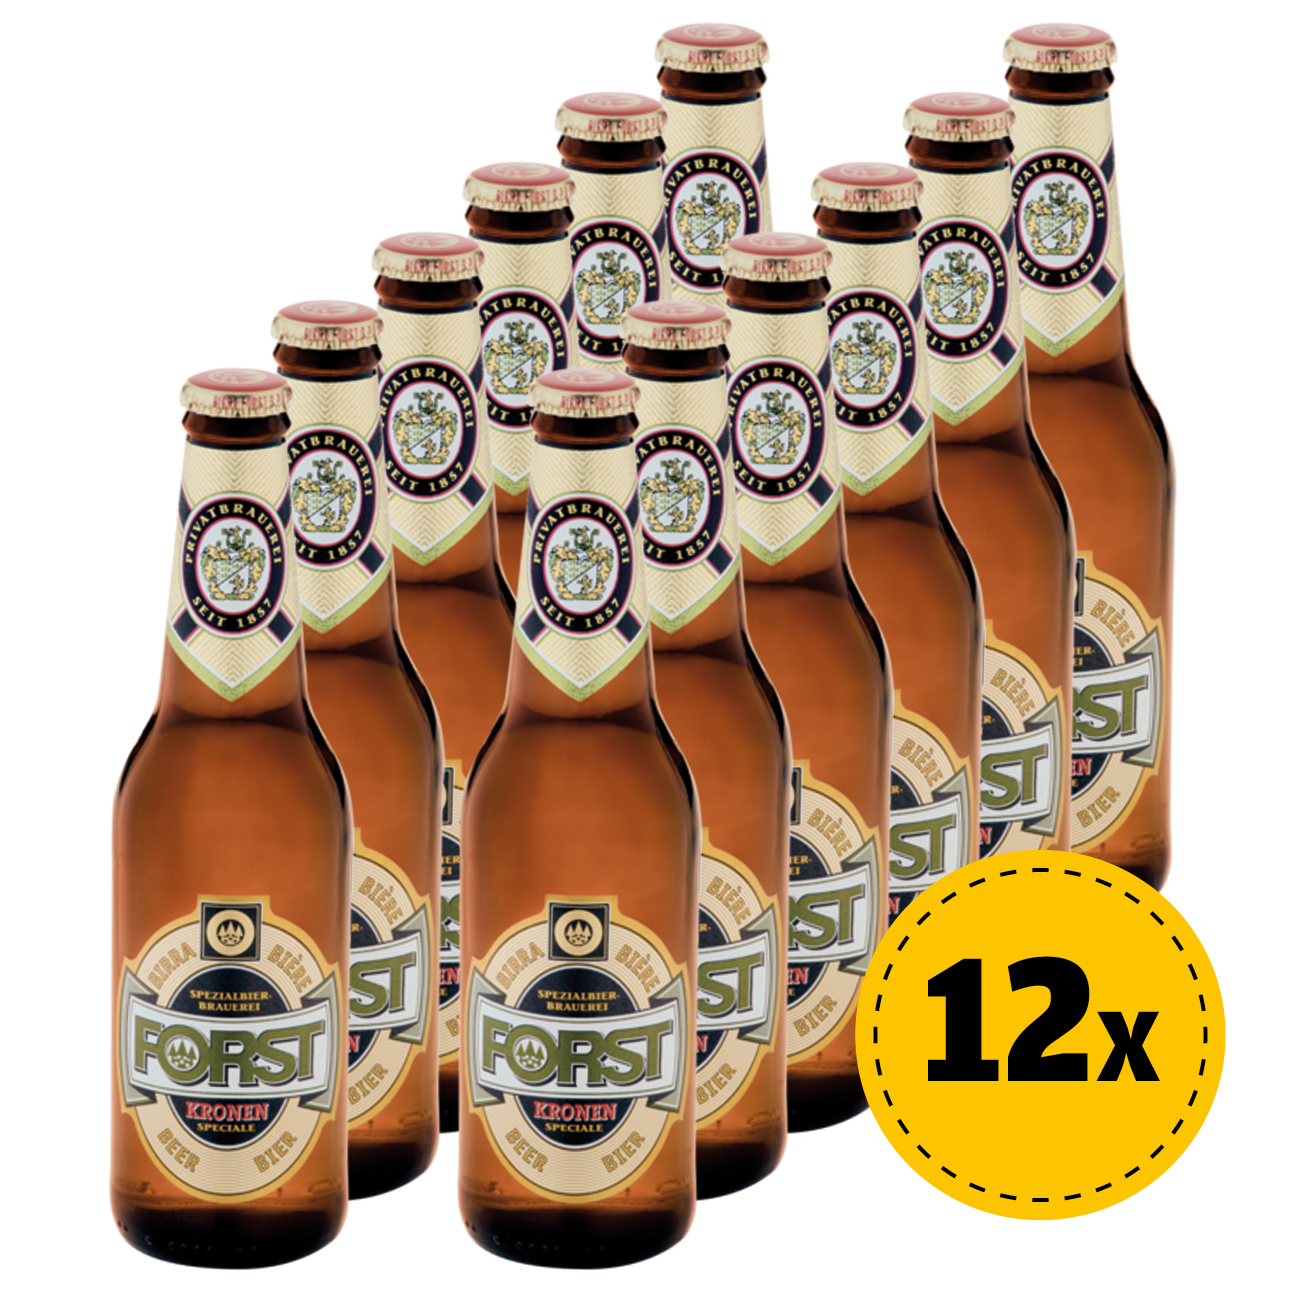 12x Forst Kronen Bier